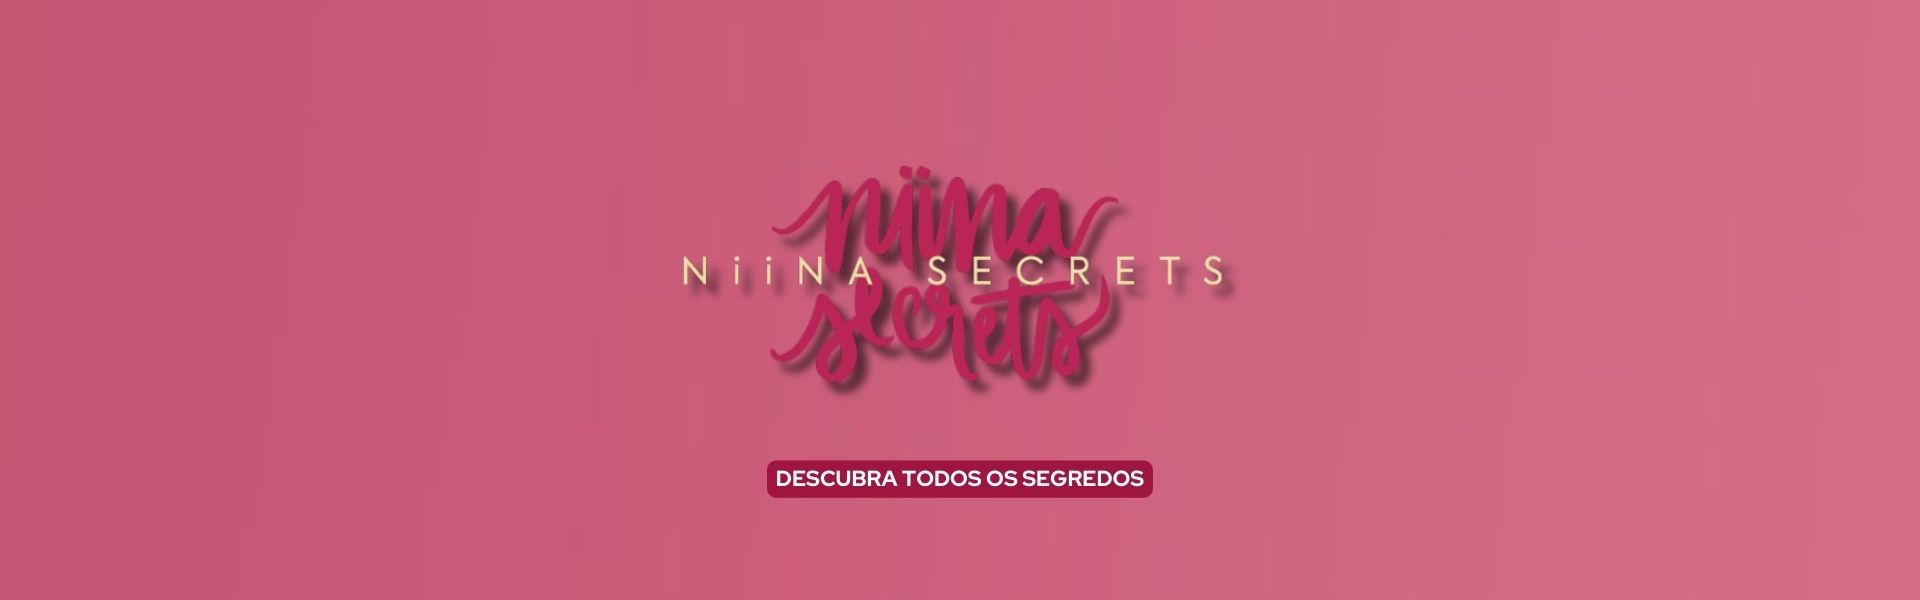 Nina secrets